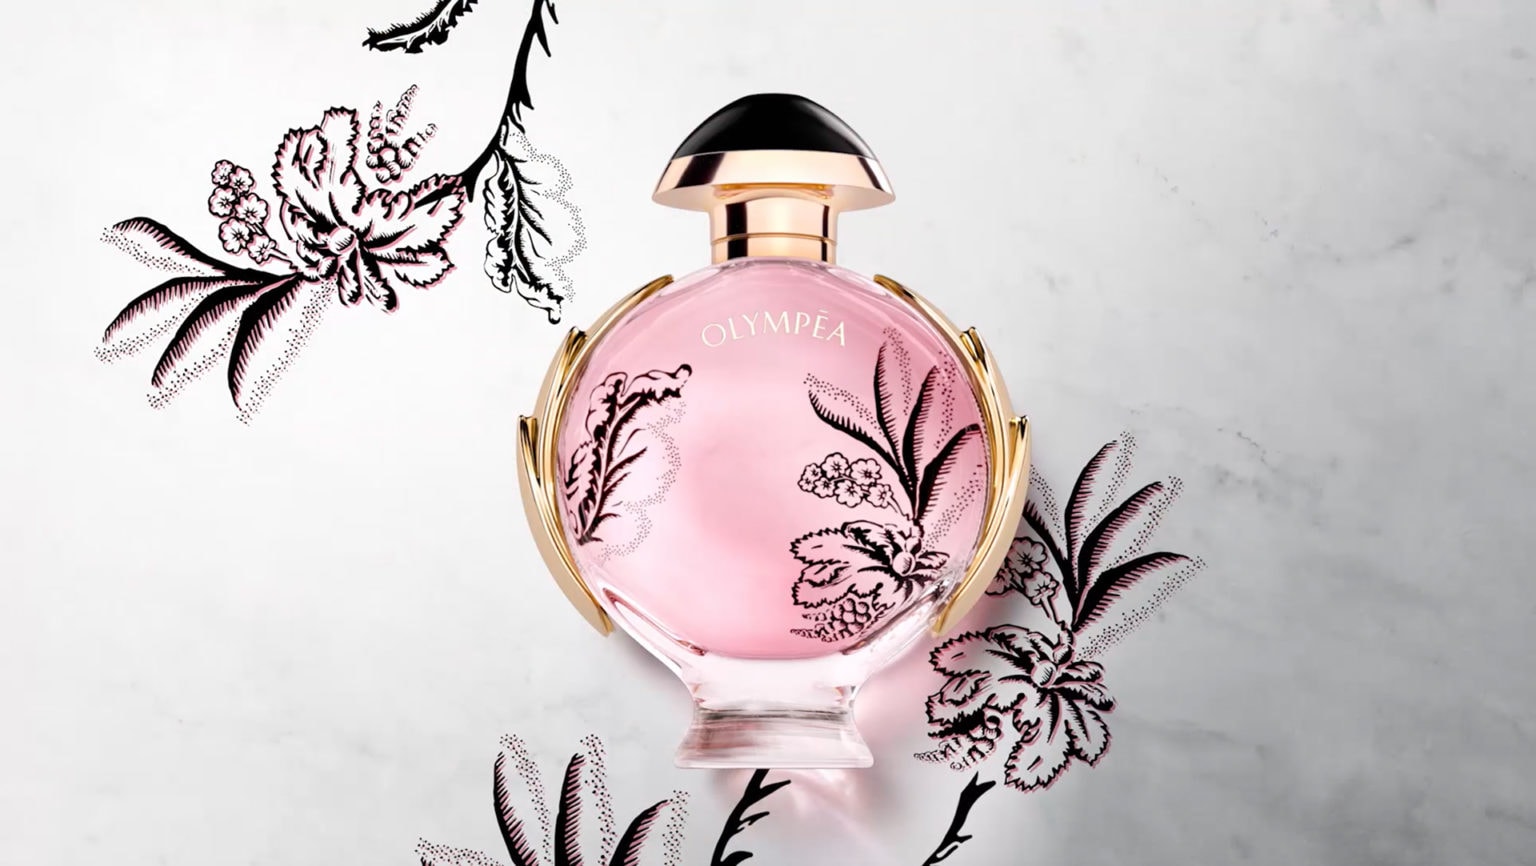 Olympéa Blossom » Rabanne » The Parfumerie » Sri Lanka